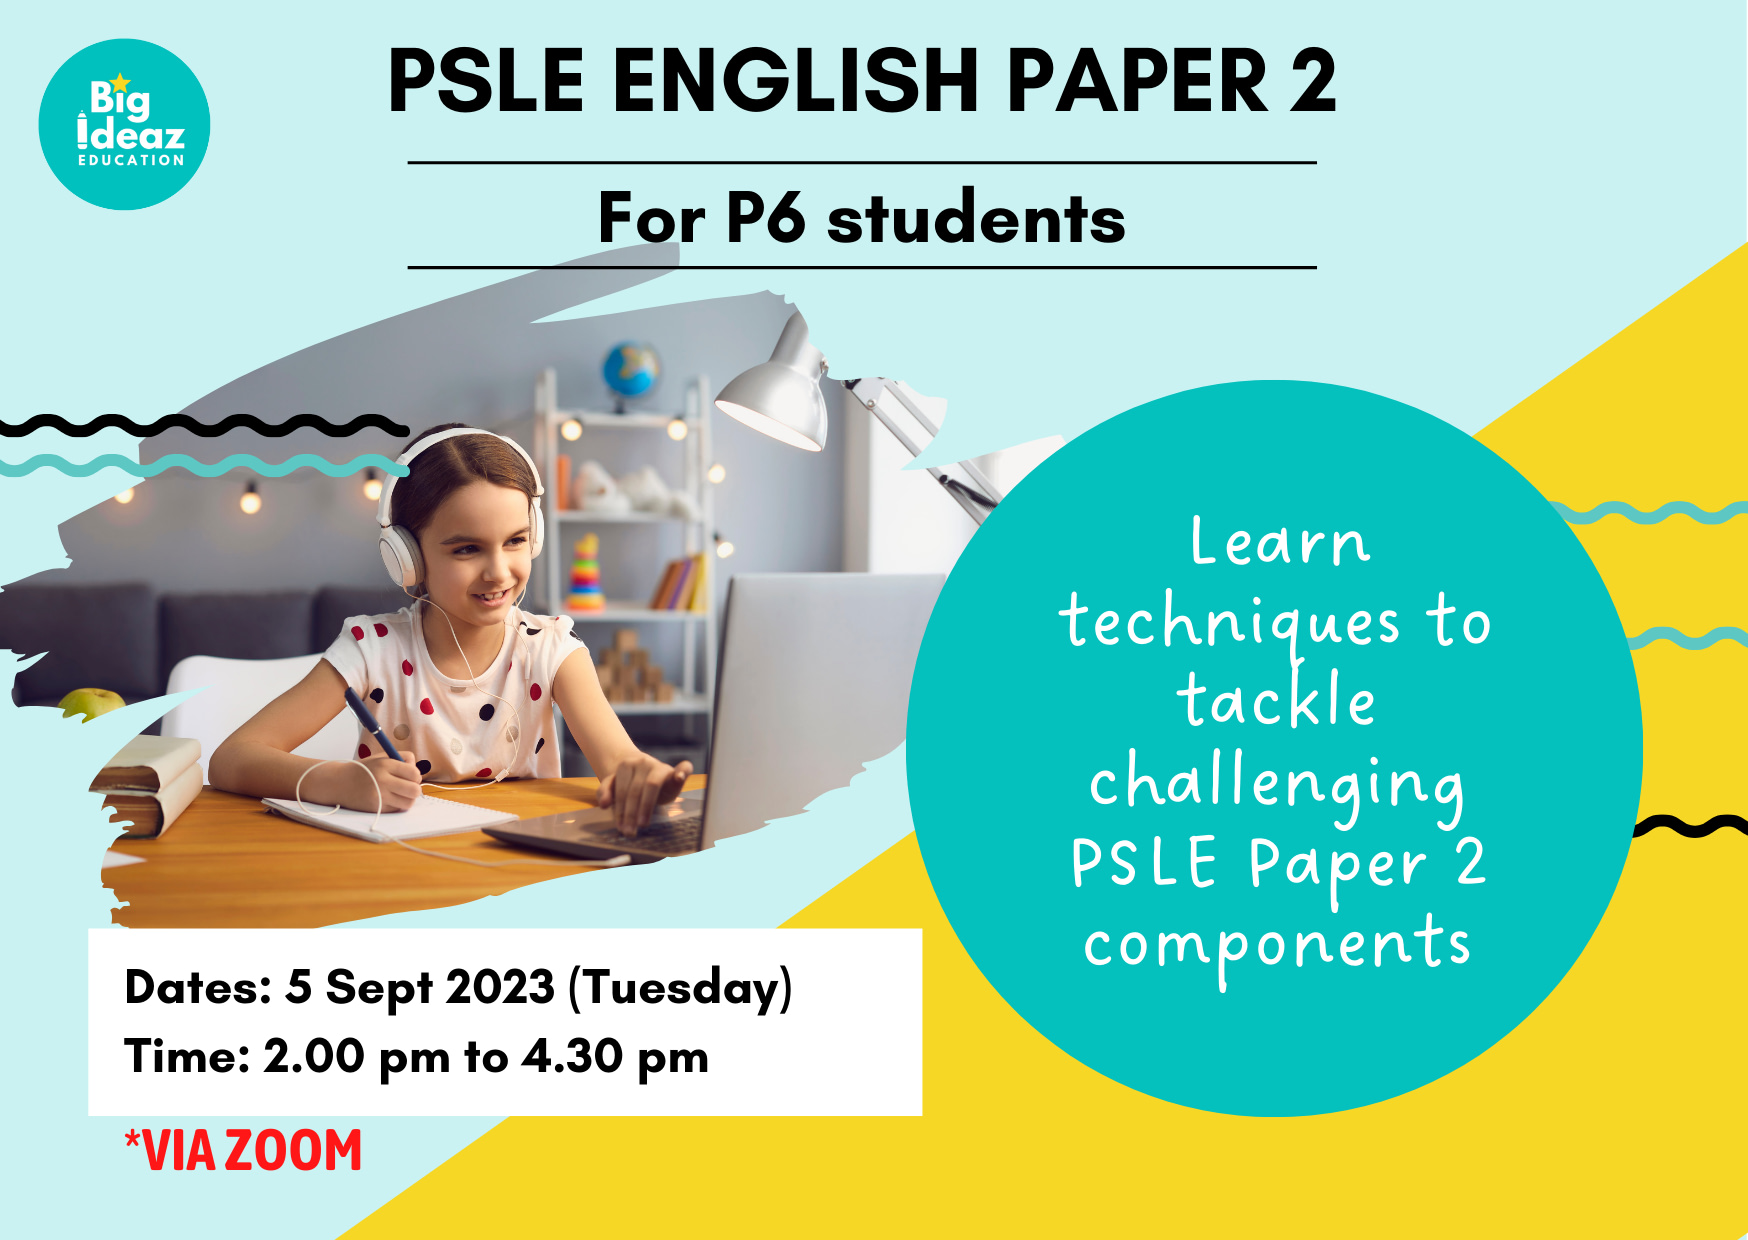 PSLE English Paper 2 Workshop (ONLINE) for P6